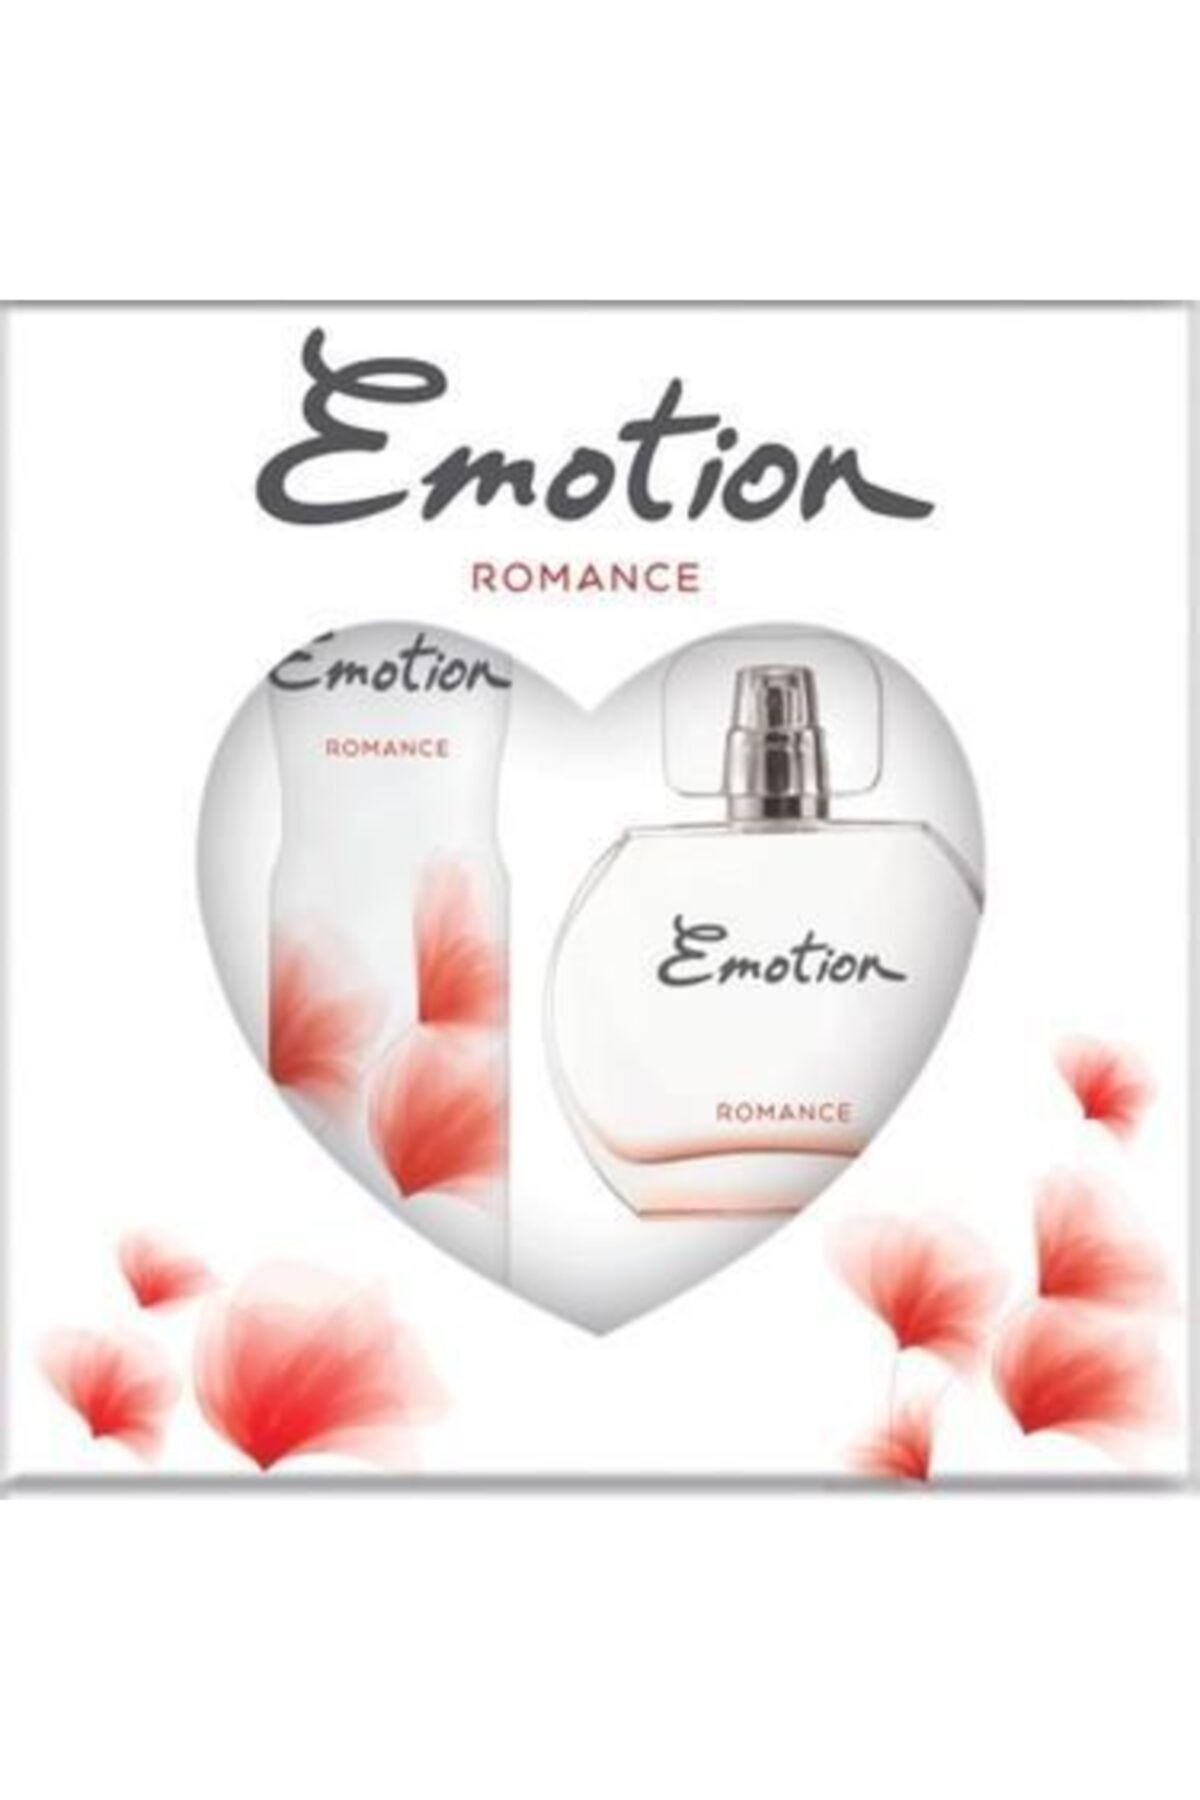 Emotion Emotıon Set Edt+deo Romance